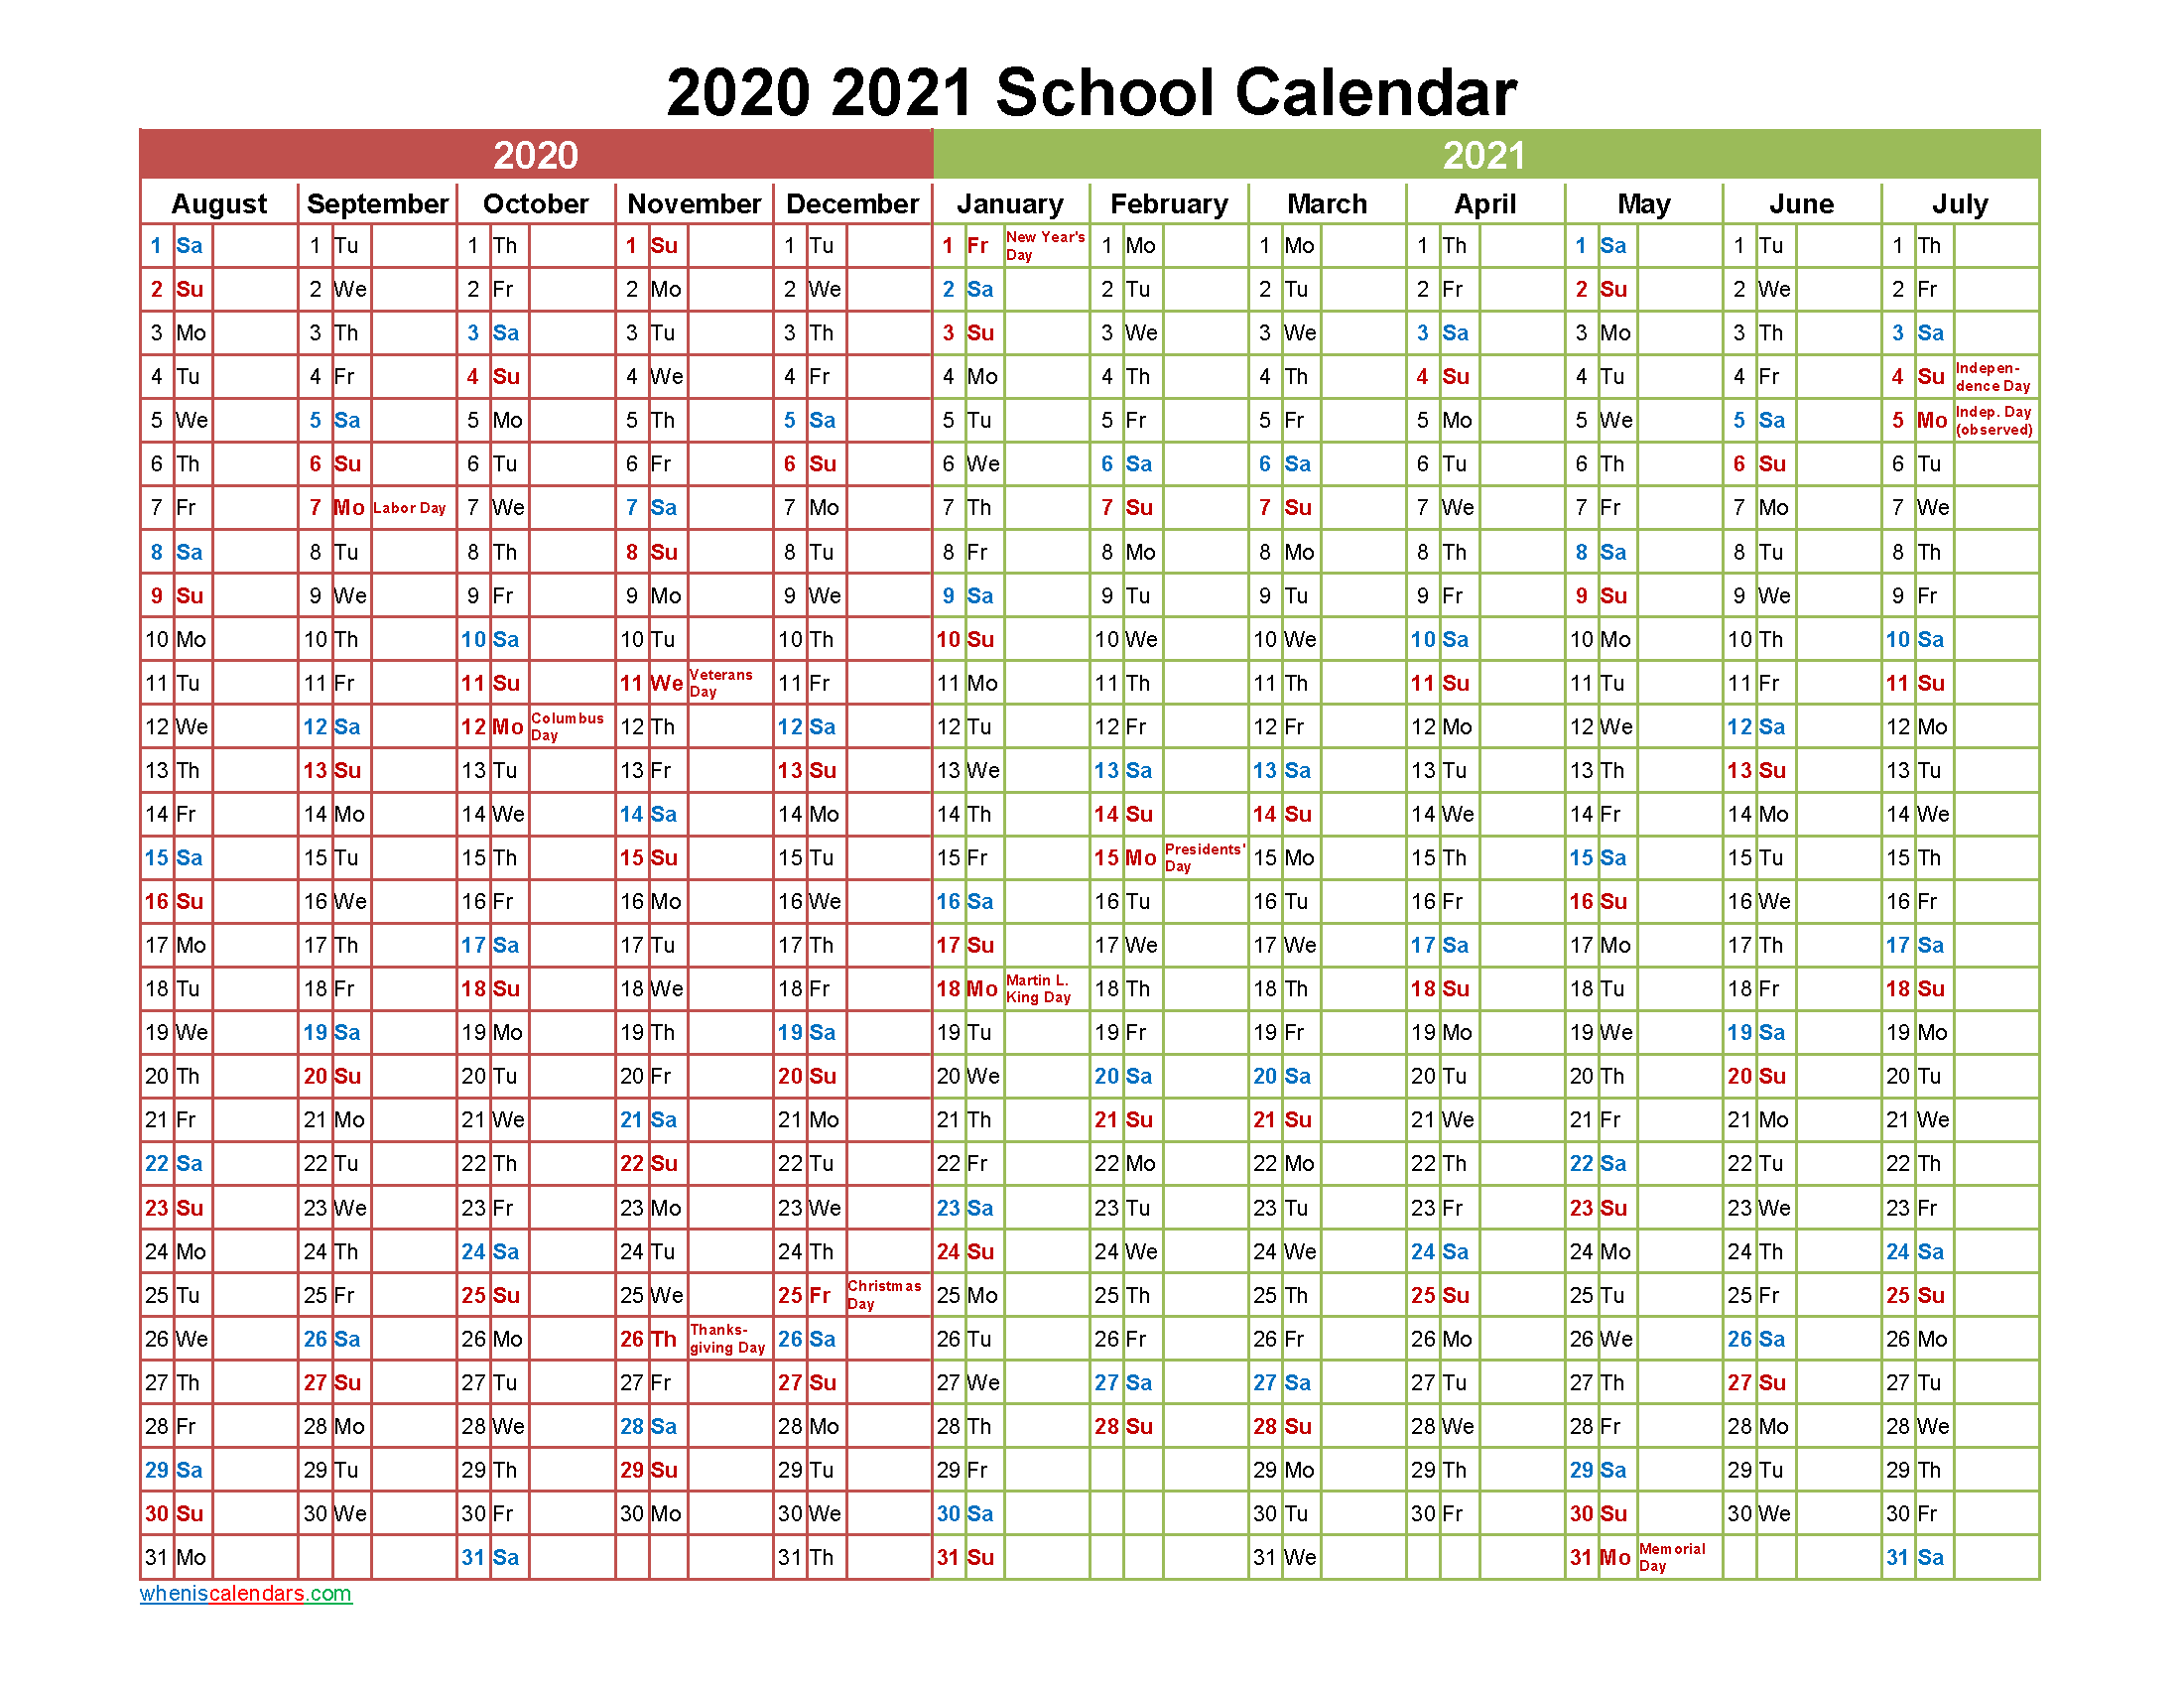 2020 and 2021 School Calendar Printable - Template No.21scl7